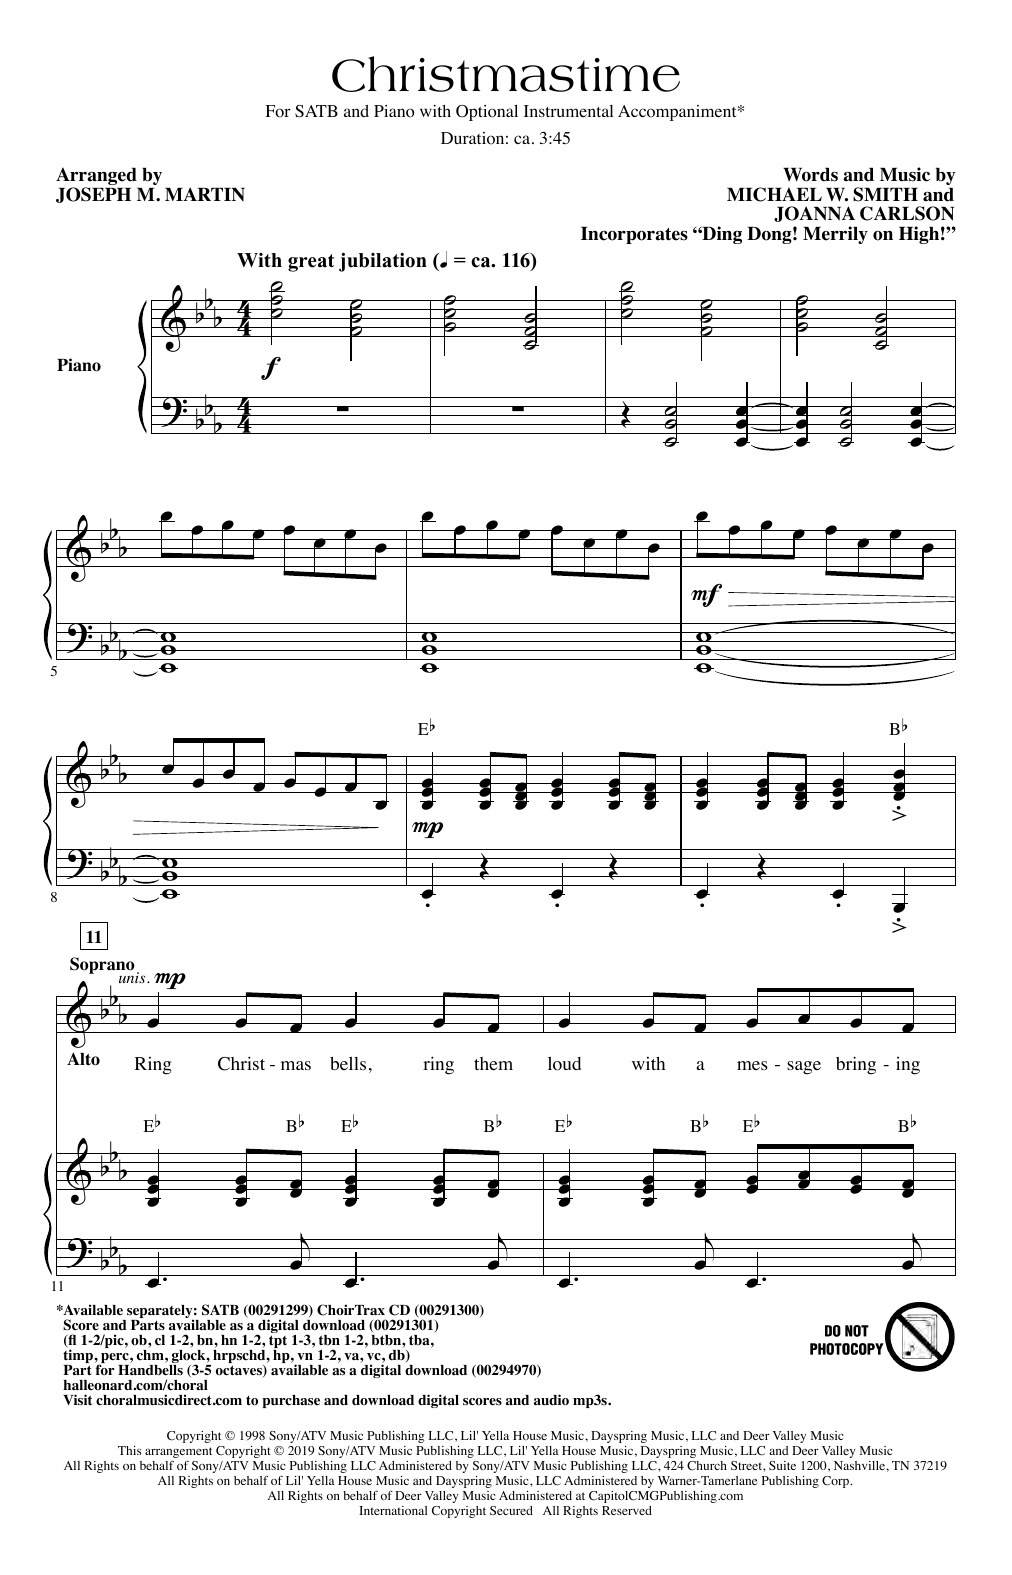 Michael W. Smith & Joanna Carlson Christmastime (arr. Joseph M. Martin) Sheet Music Notes & Chords for SATB Choir - Download or Print PDF